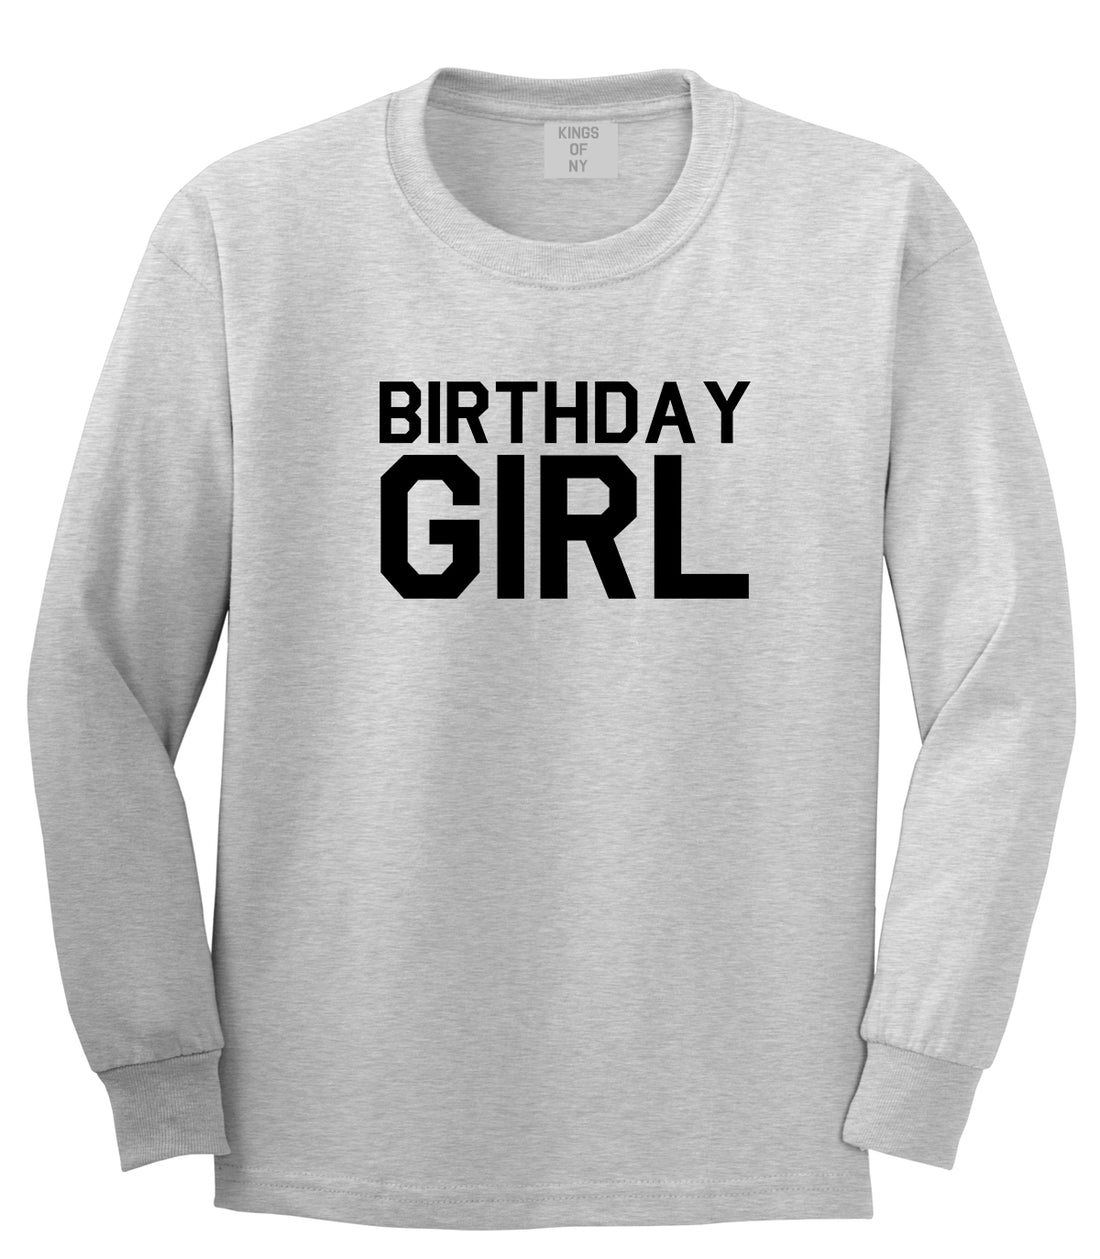 Birthday Girl Grey Long Sleeve T-Shirt by Kings Of NY